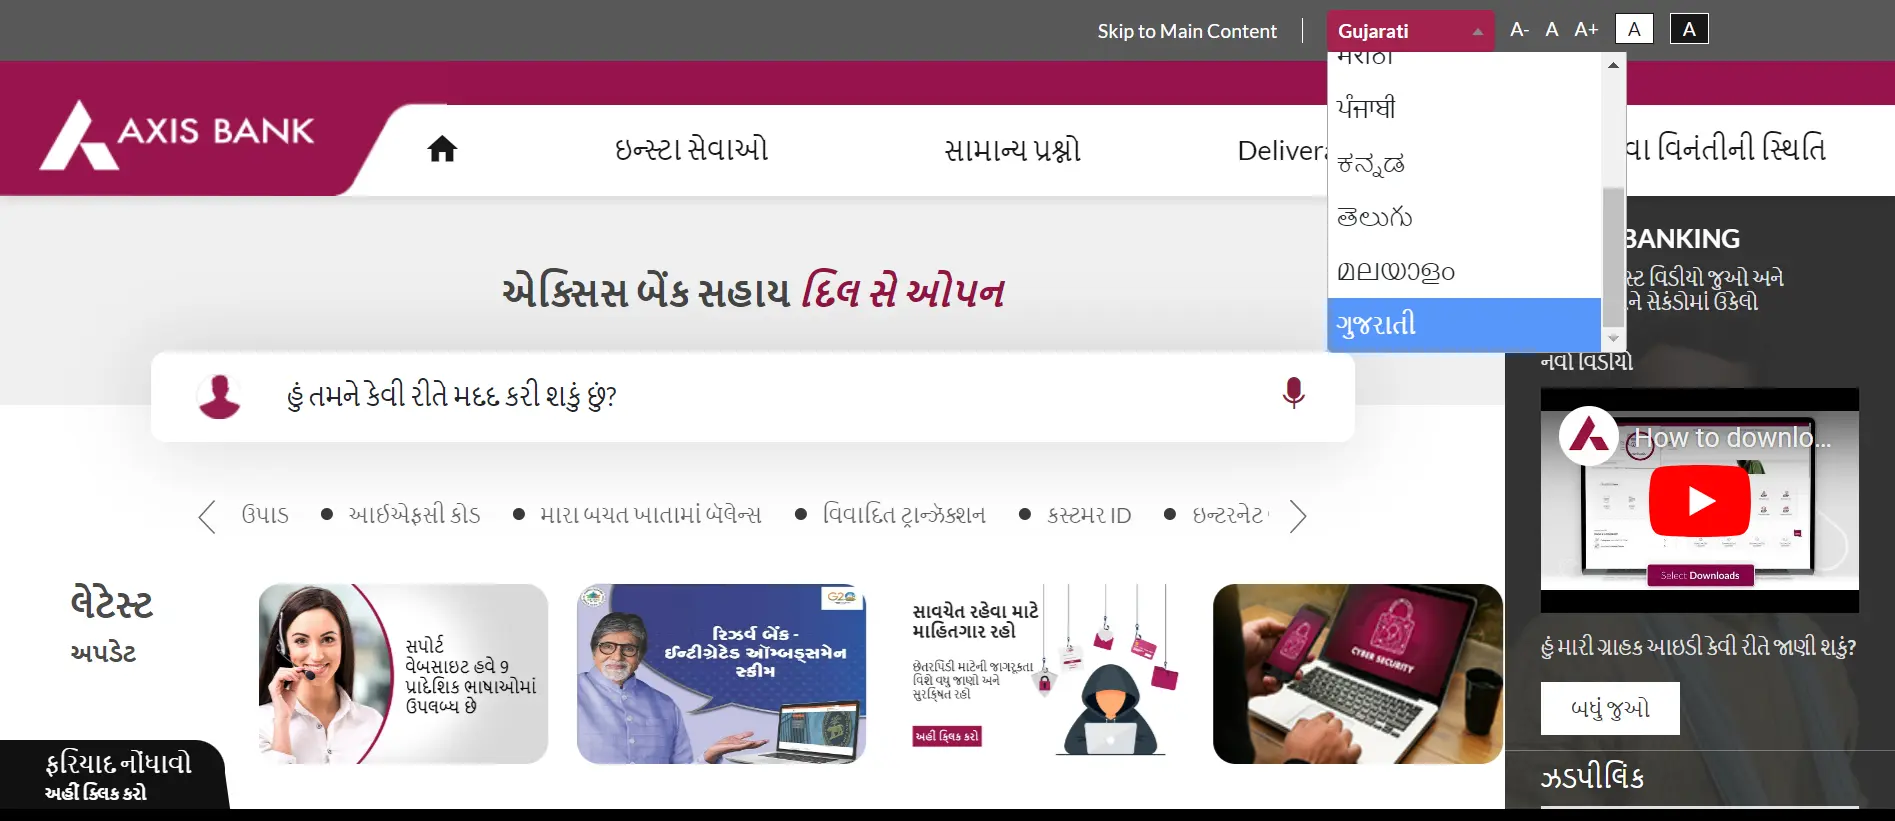 Axis Bank Customer support website in gujarati